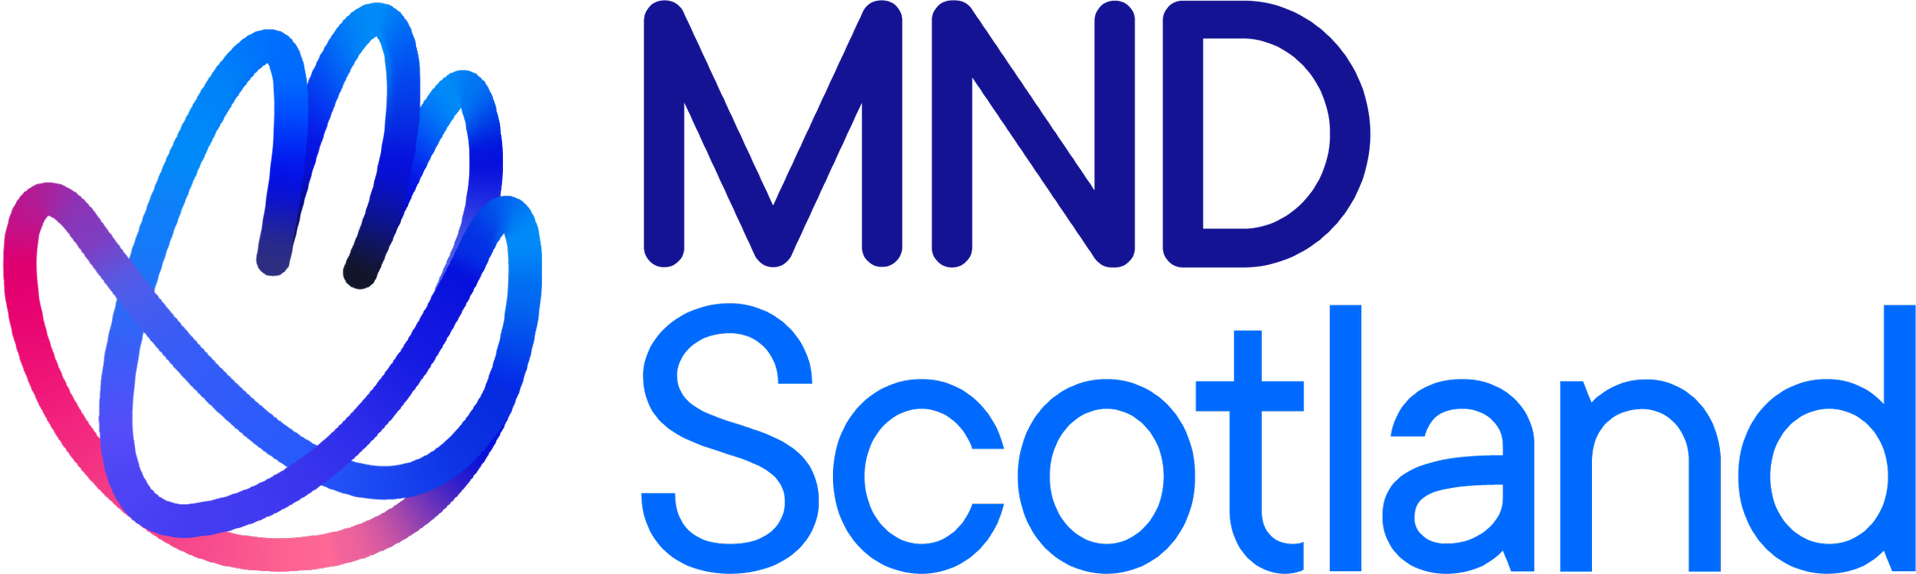 MND Scotland Grant Programme